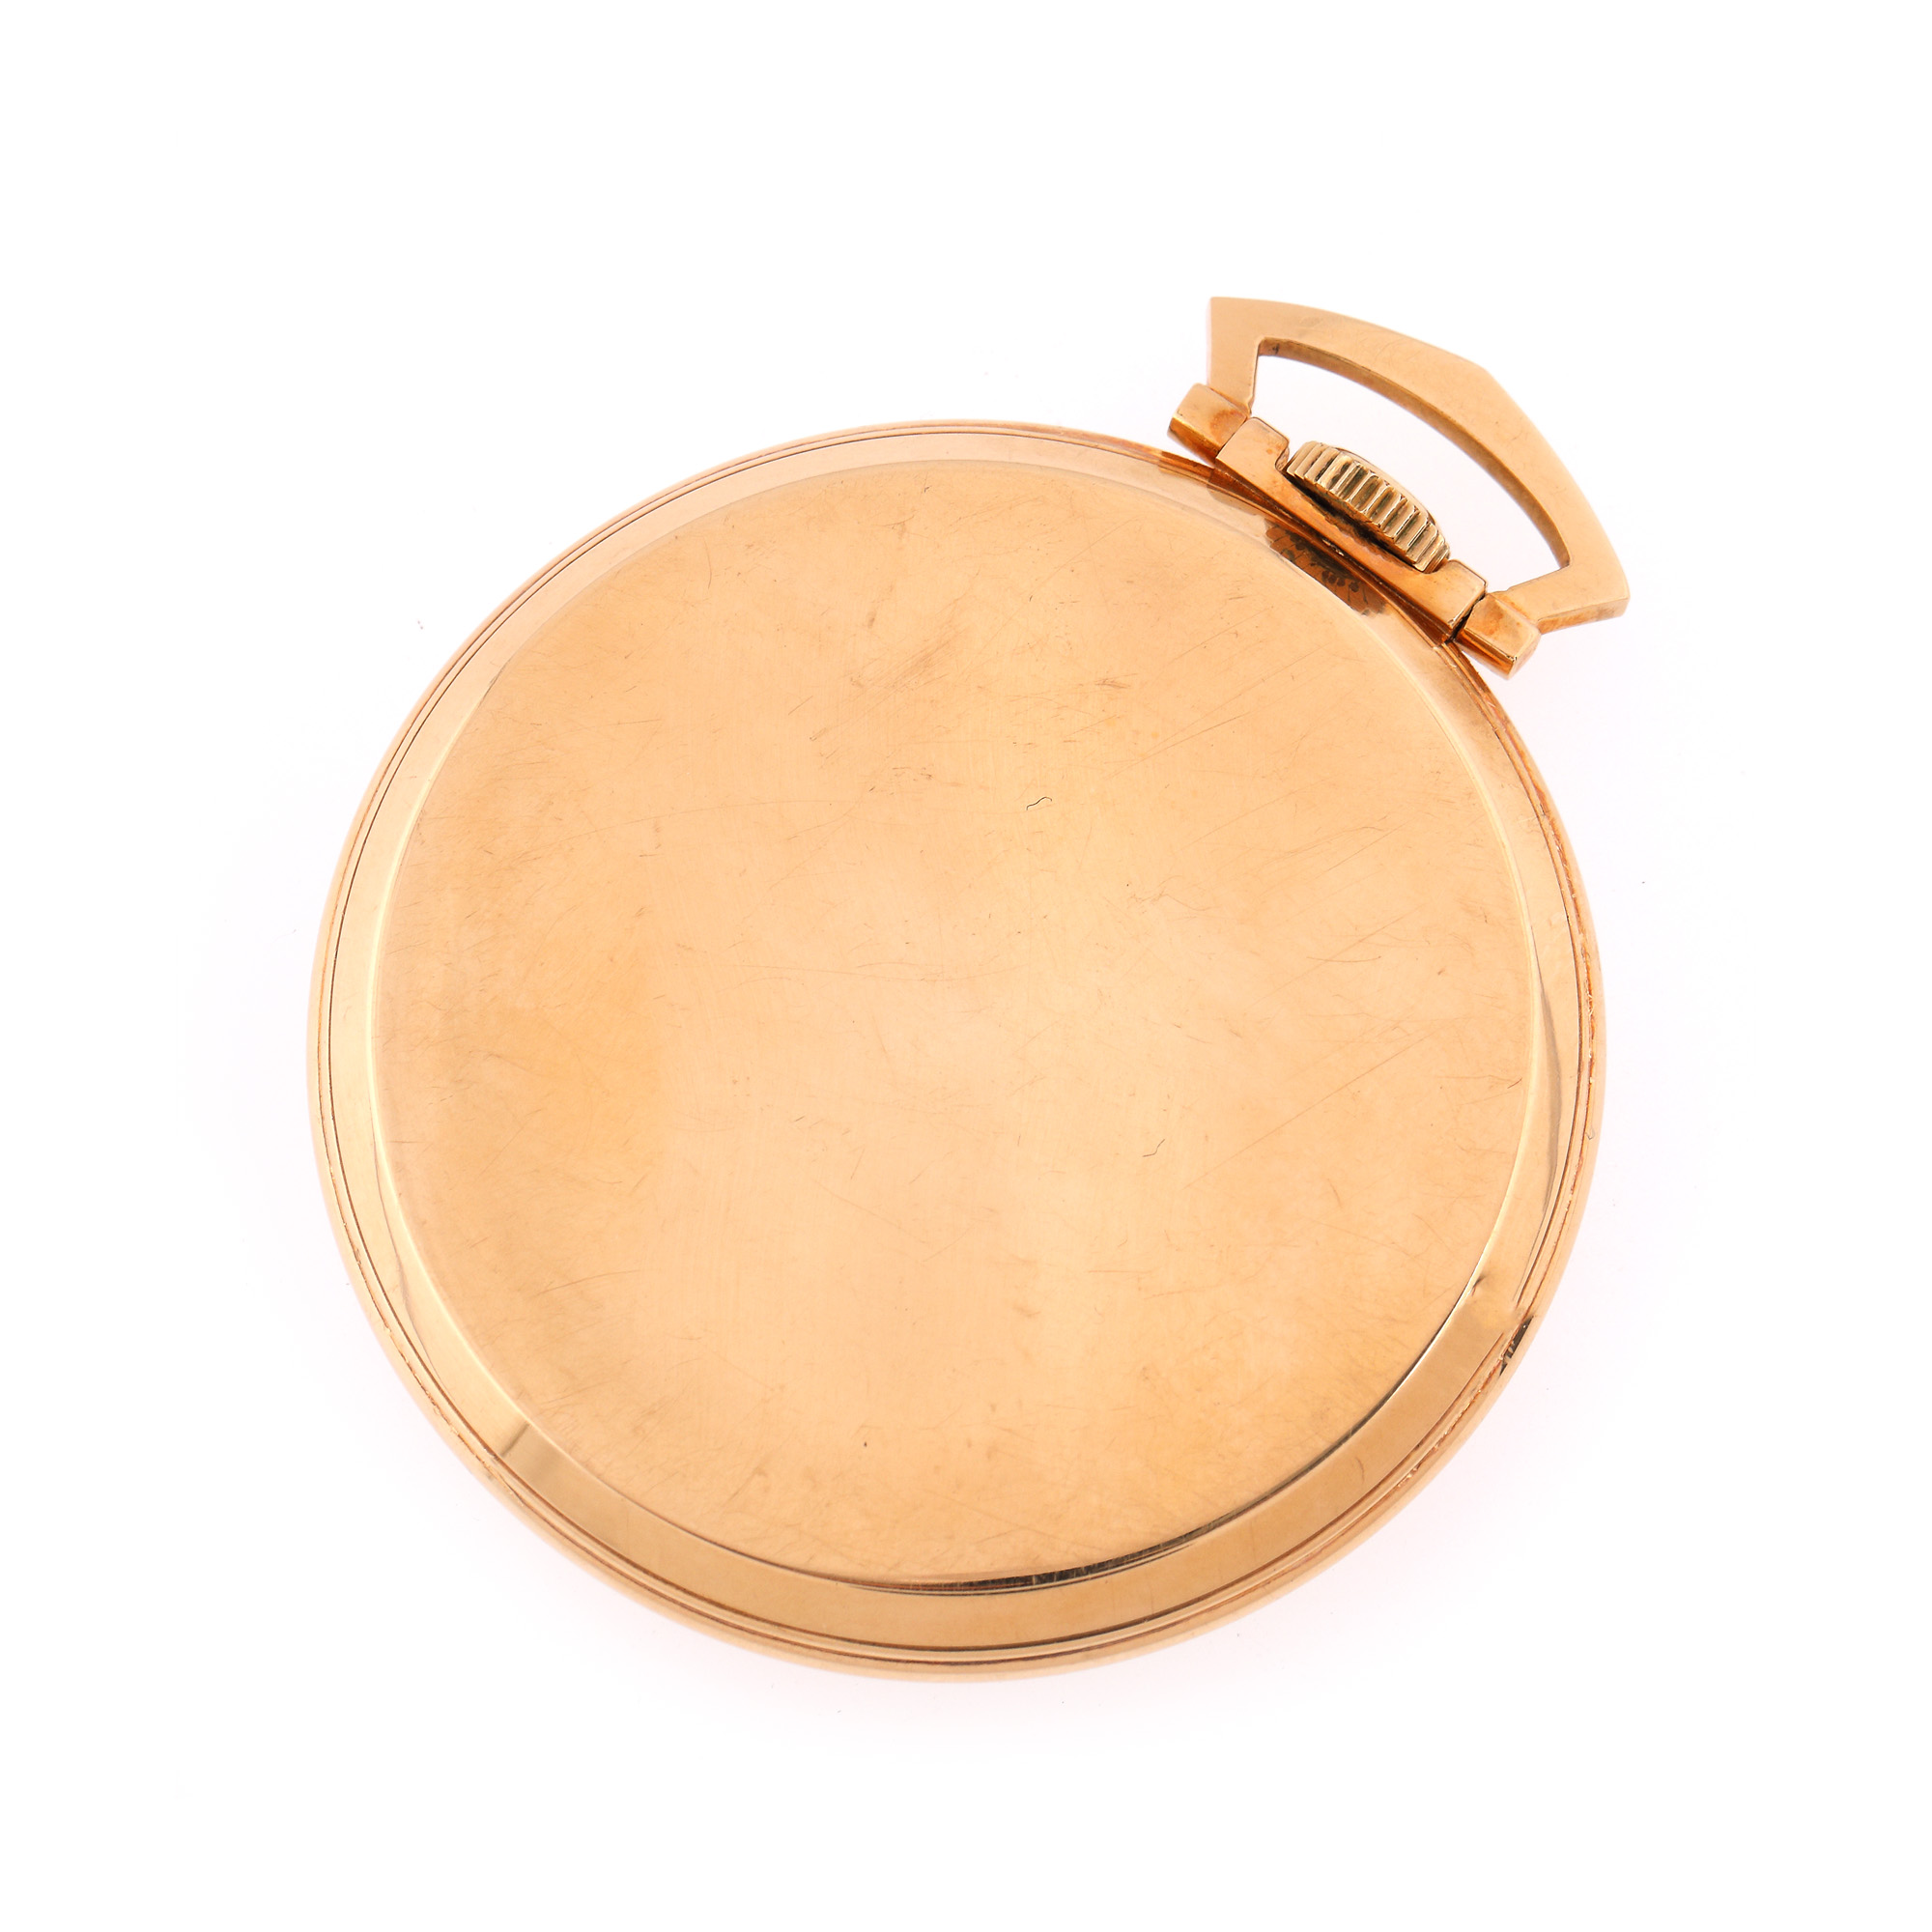 Longines pocket watch, gold, original box, approx. 1933 - Image 3 of 3